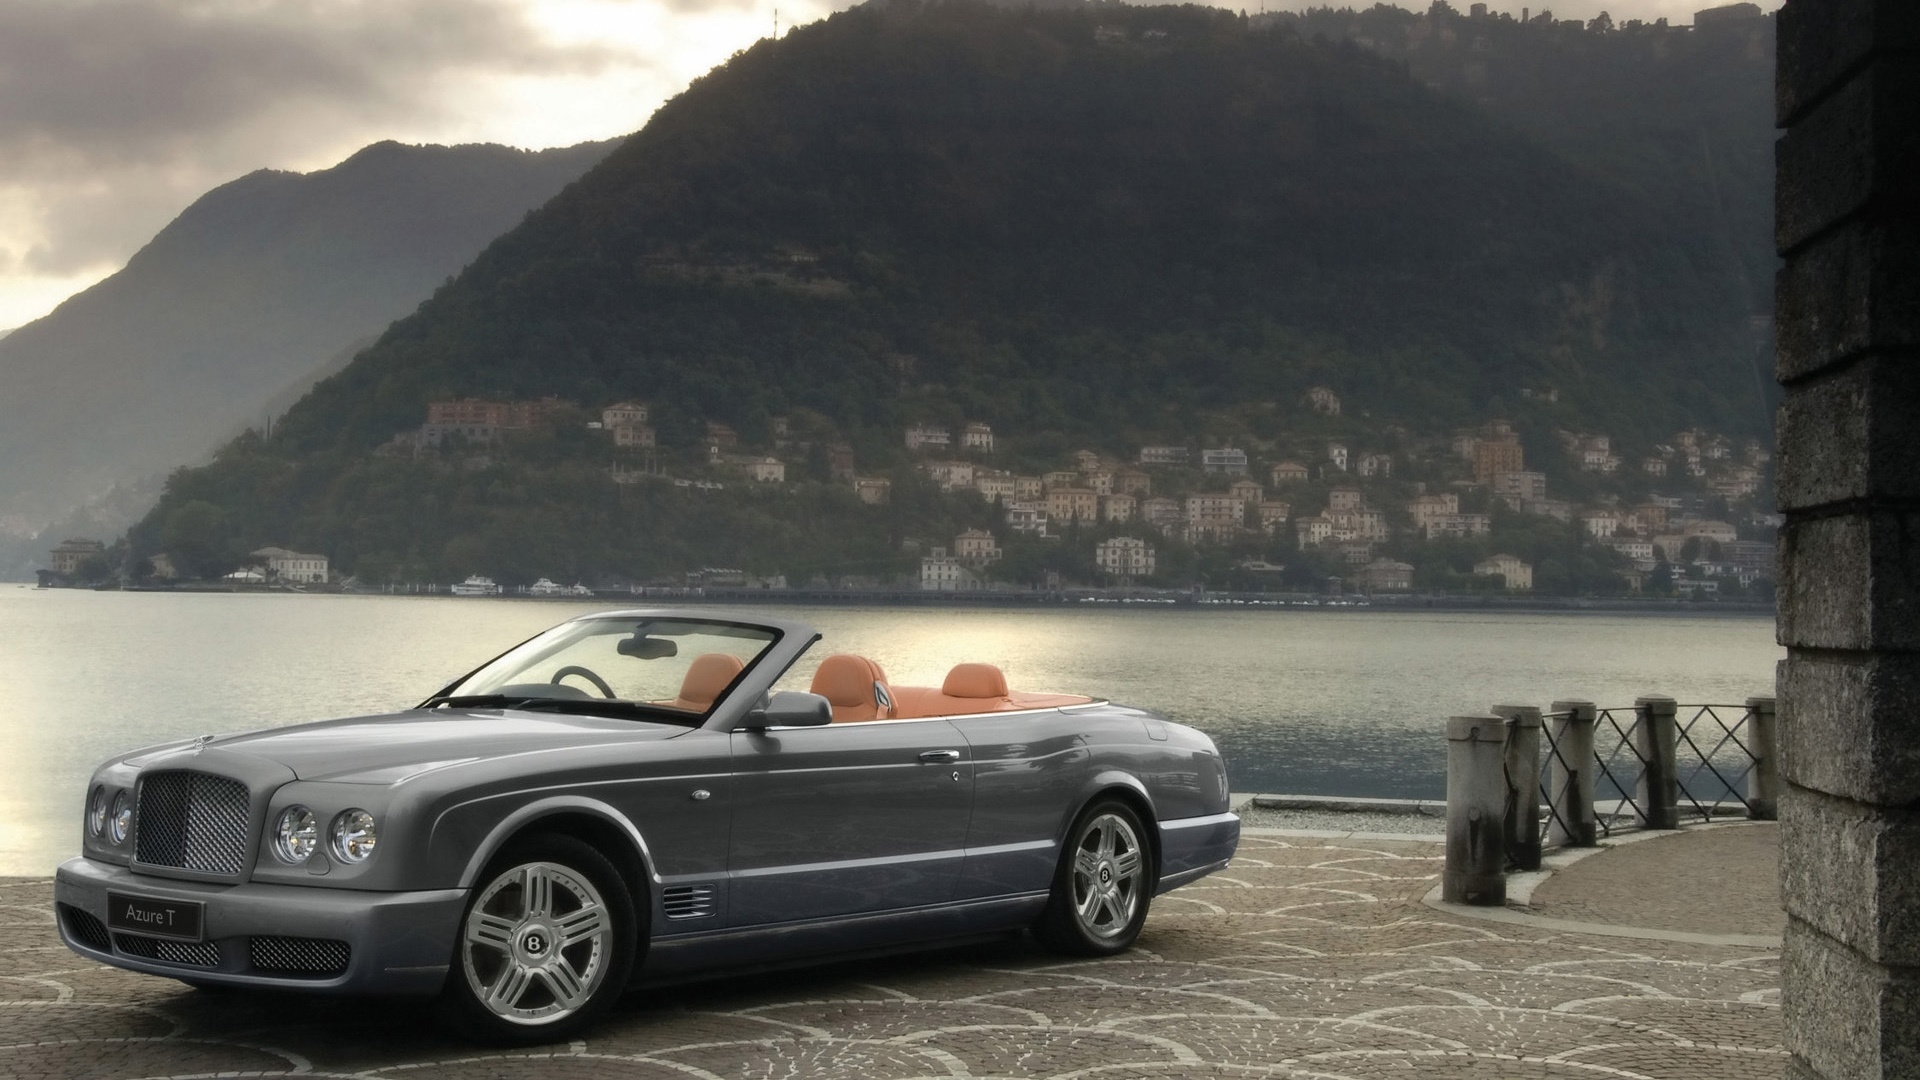 Bentley Azure T Venusian Grey 2009 for 1920 x 1080 HDTV 1080p resolution